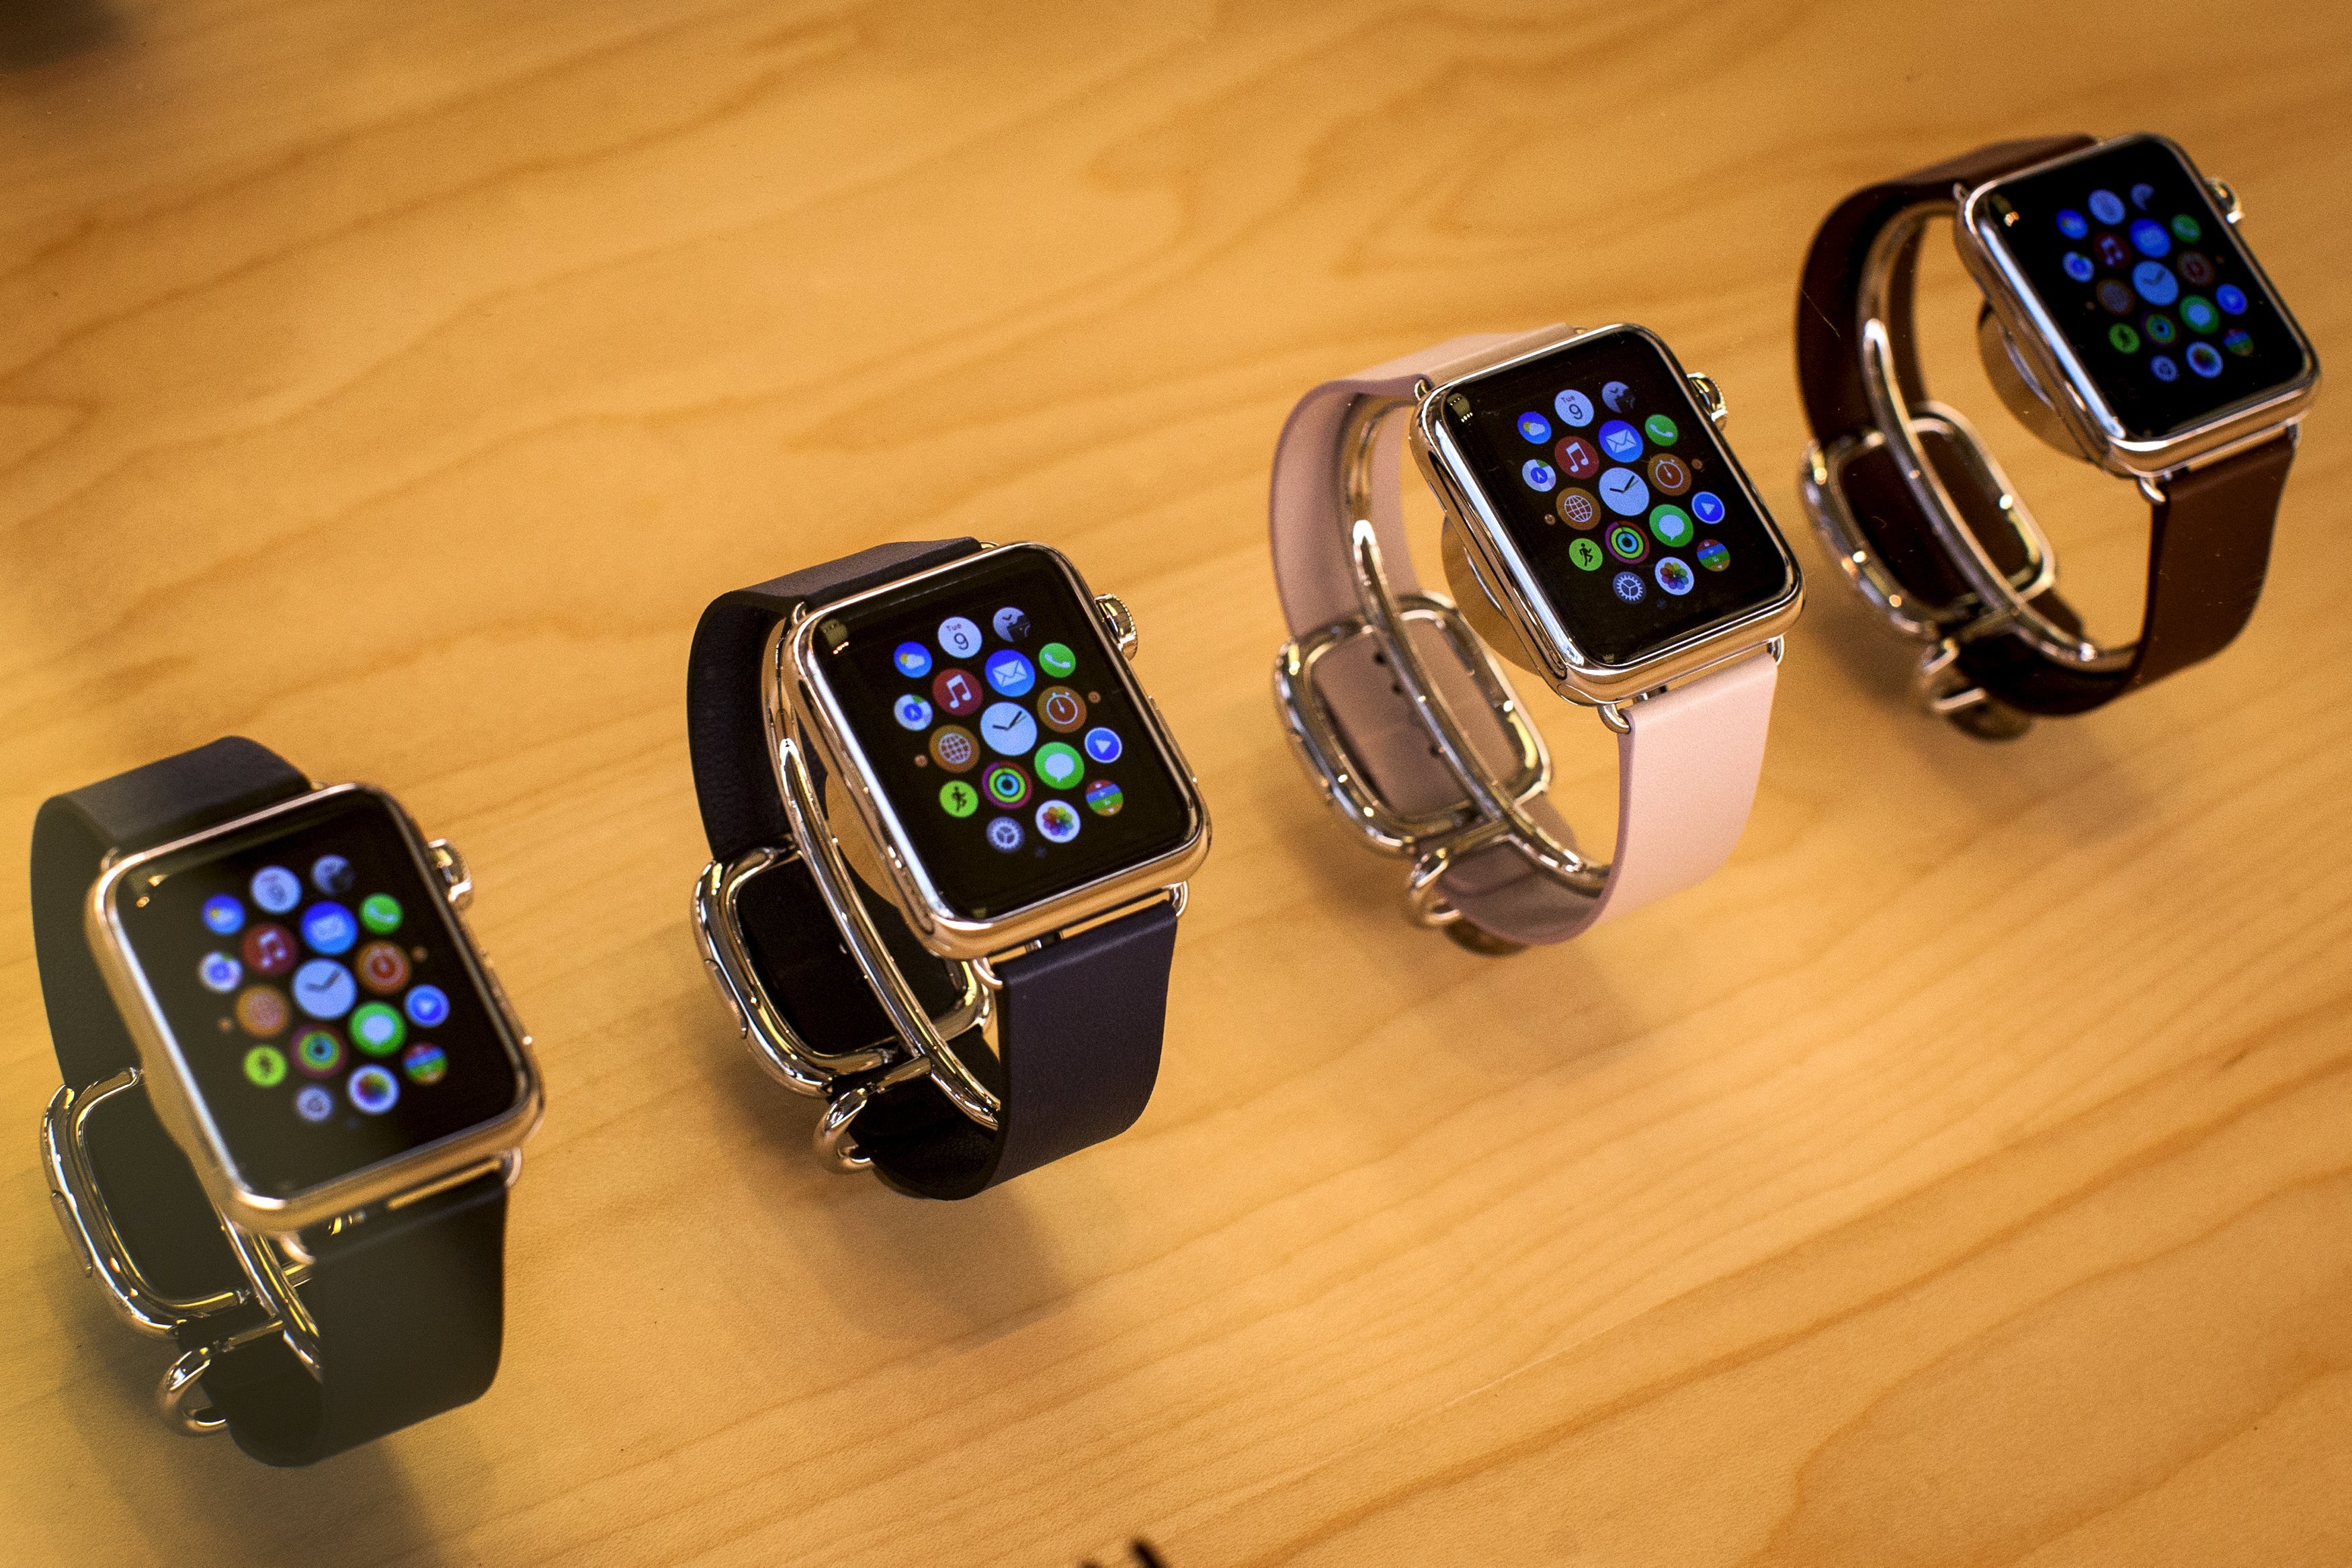 Appel часы. Эпл вотч 7. Циферблат эпл вотч 7. Смарт-часы Apple watch 7. Эпл вотч 6.